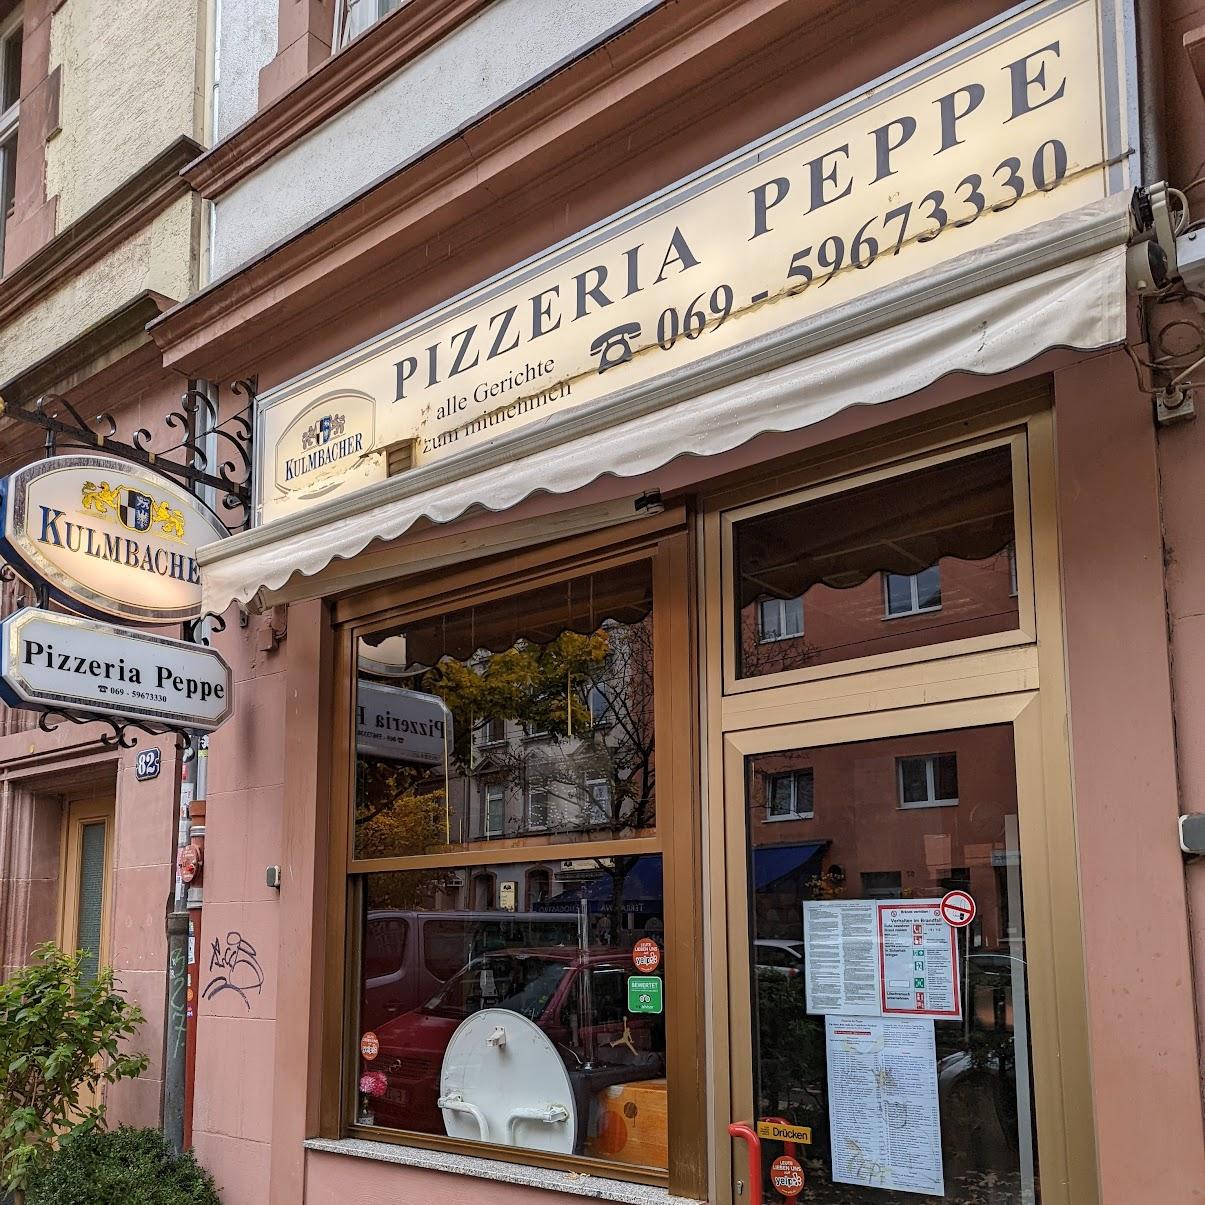 Restaurant "Pizzeria da Peppe" in Frankfurt am Main